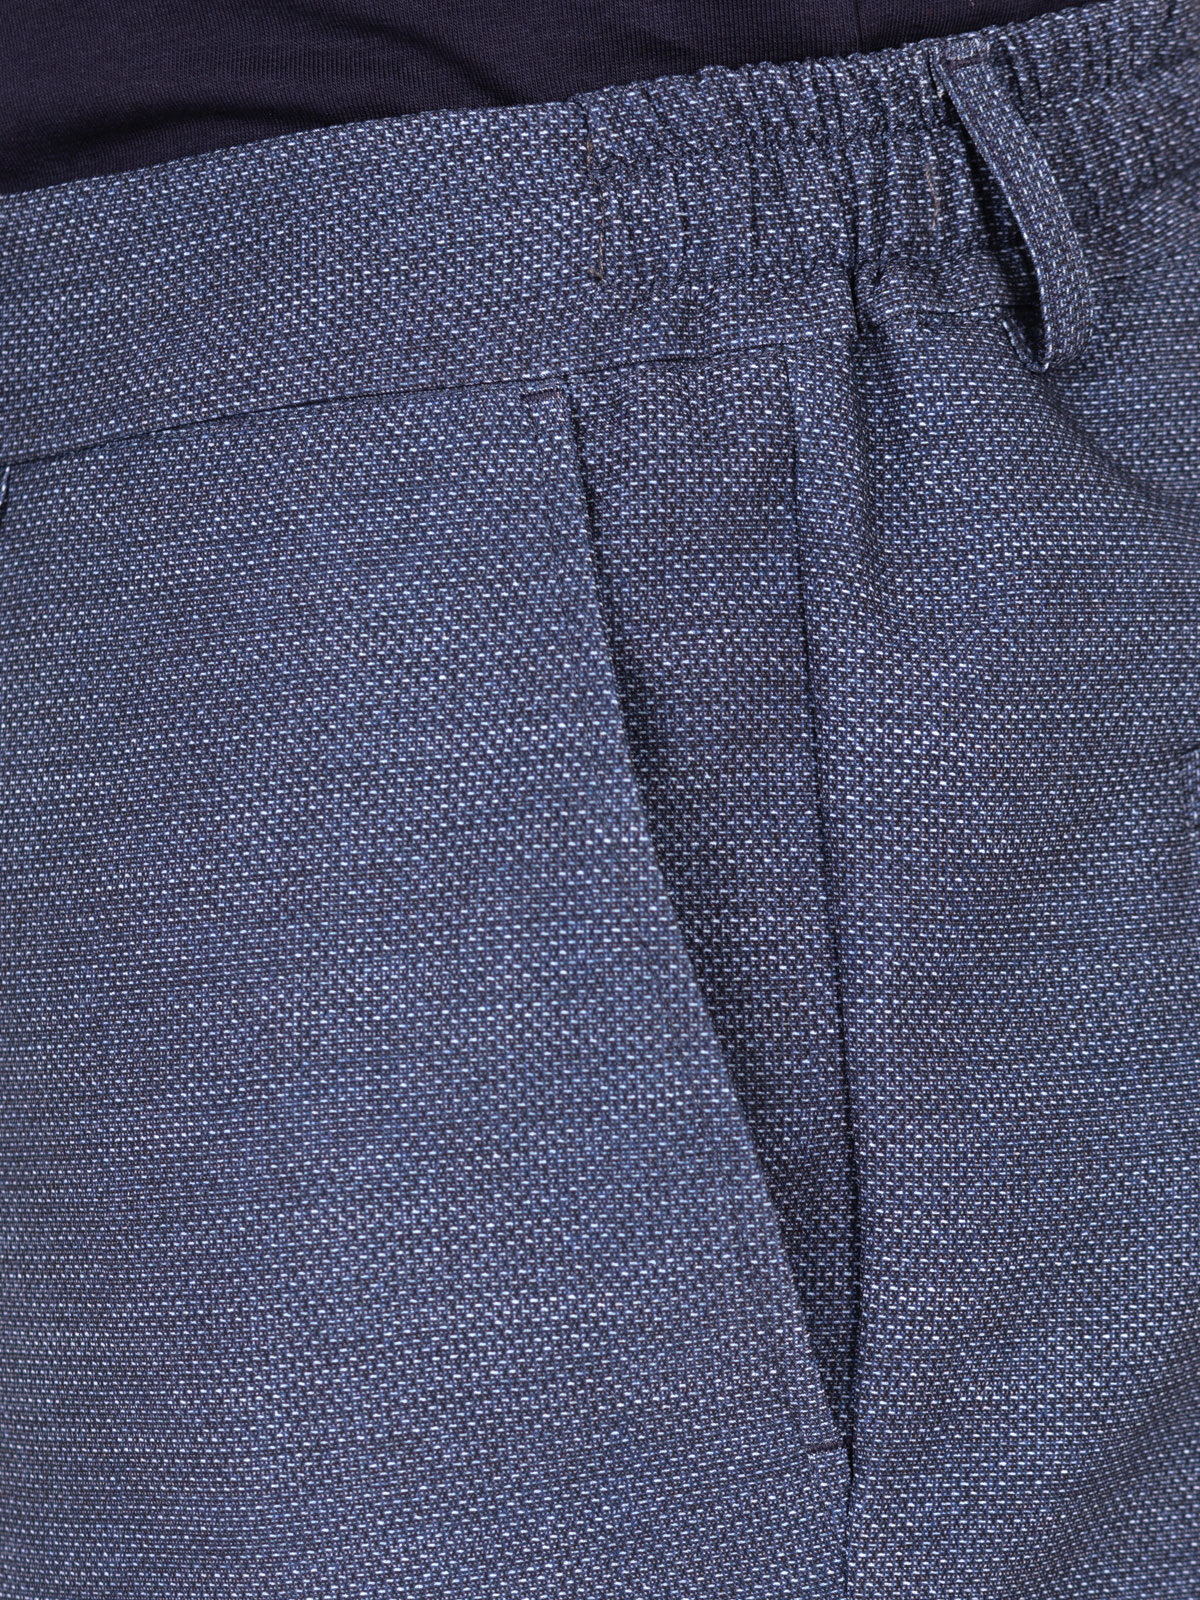 Sports pants dark blue melange - 29009 € 55.12 img4